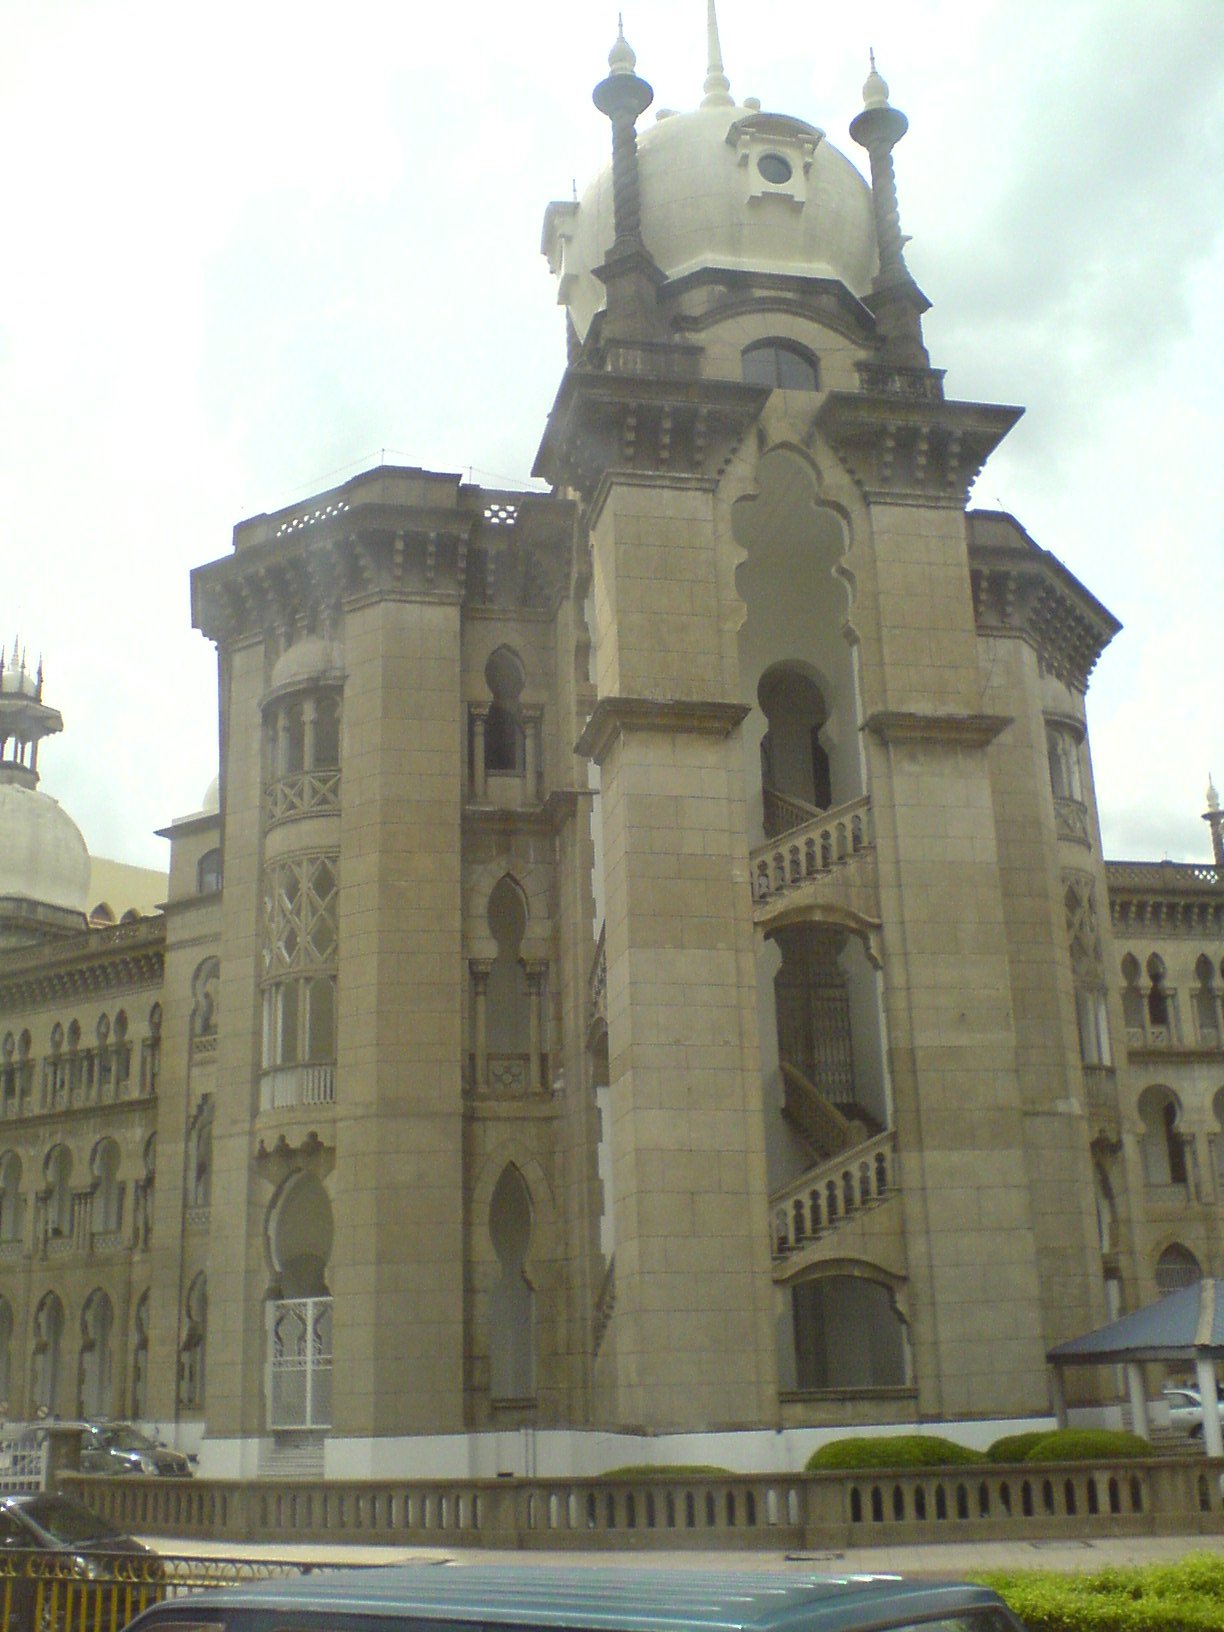 the minaret of KTM Railway Administration Building